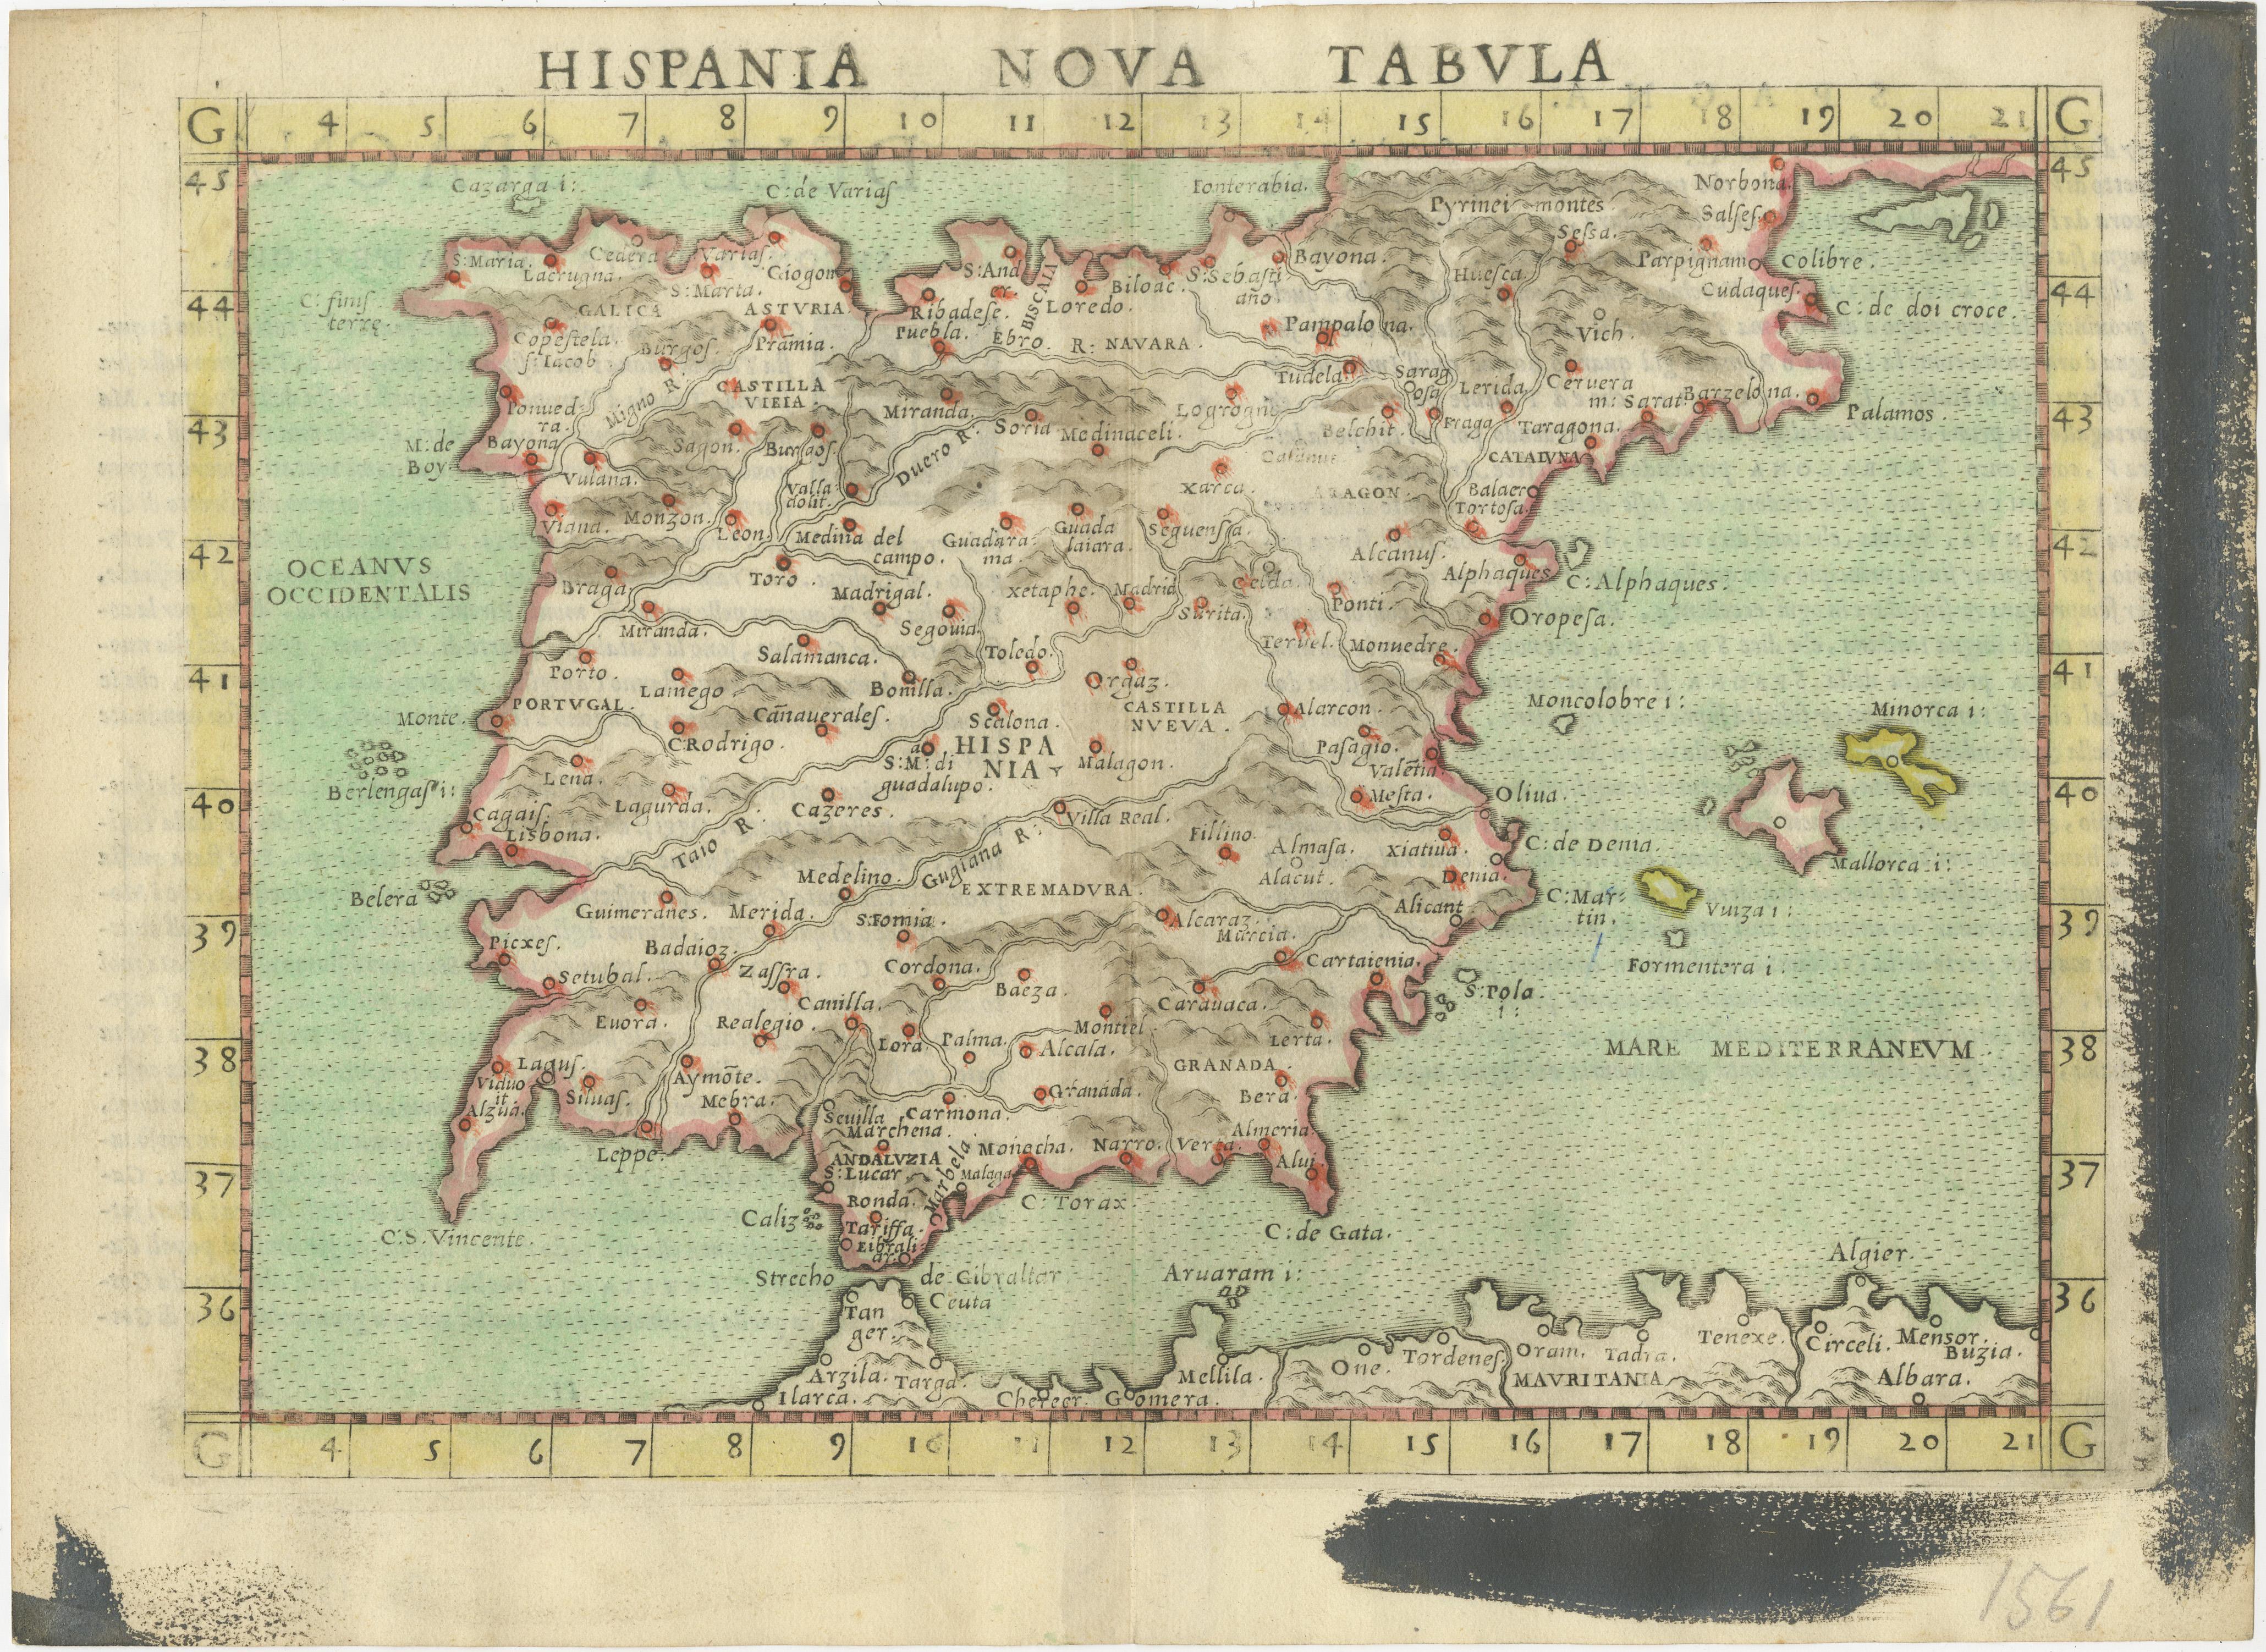 Antique map titled 'Hispania Nova Tabula'. Ruscelli's map of Spain, including the Balearic Islands. This map originates from 'Espositione & introduttioni universali di Gir. Ruscelli sopra tutta la Geografia di Tolomeo (..)' published by Girolamo